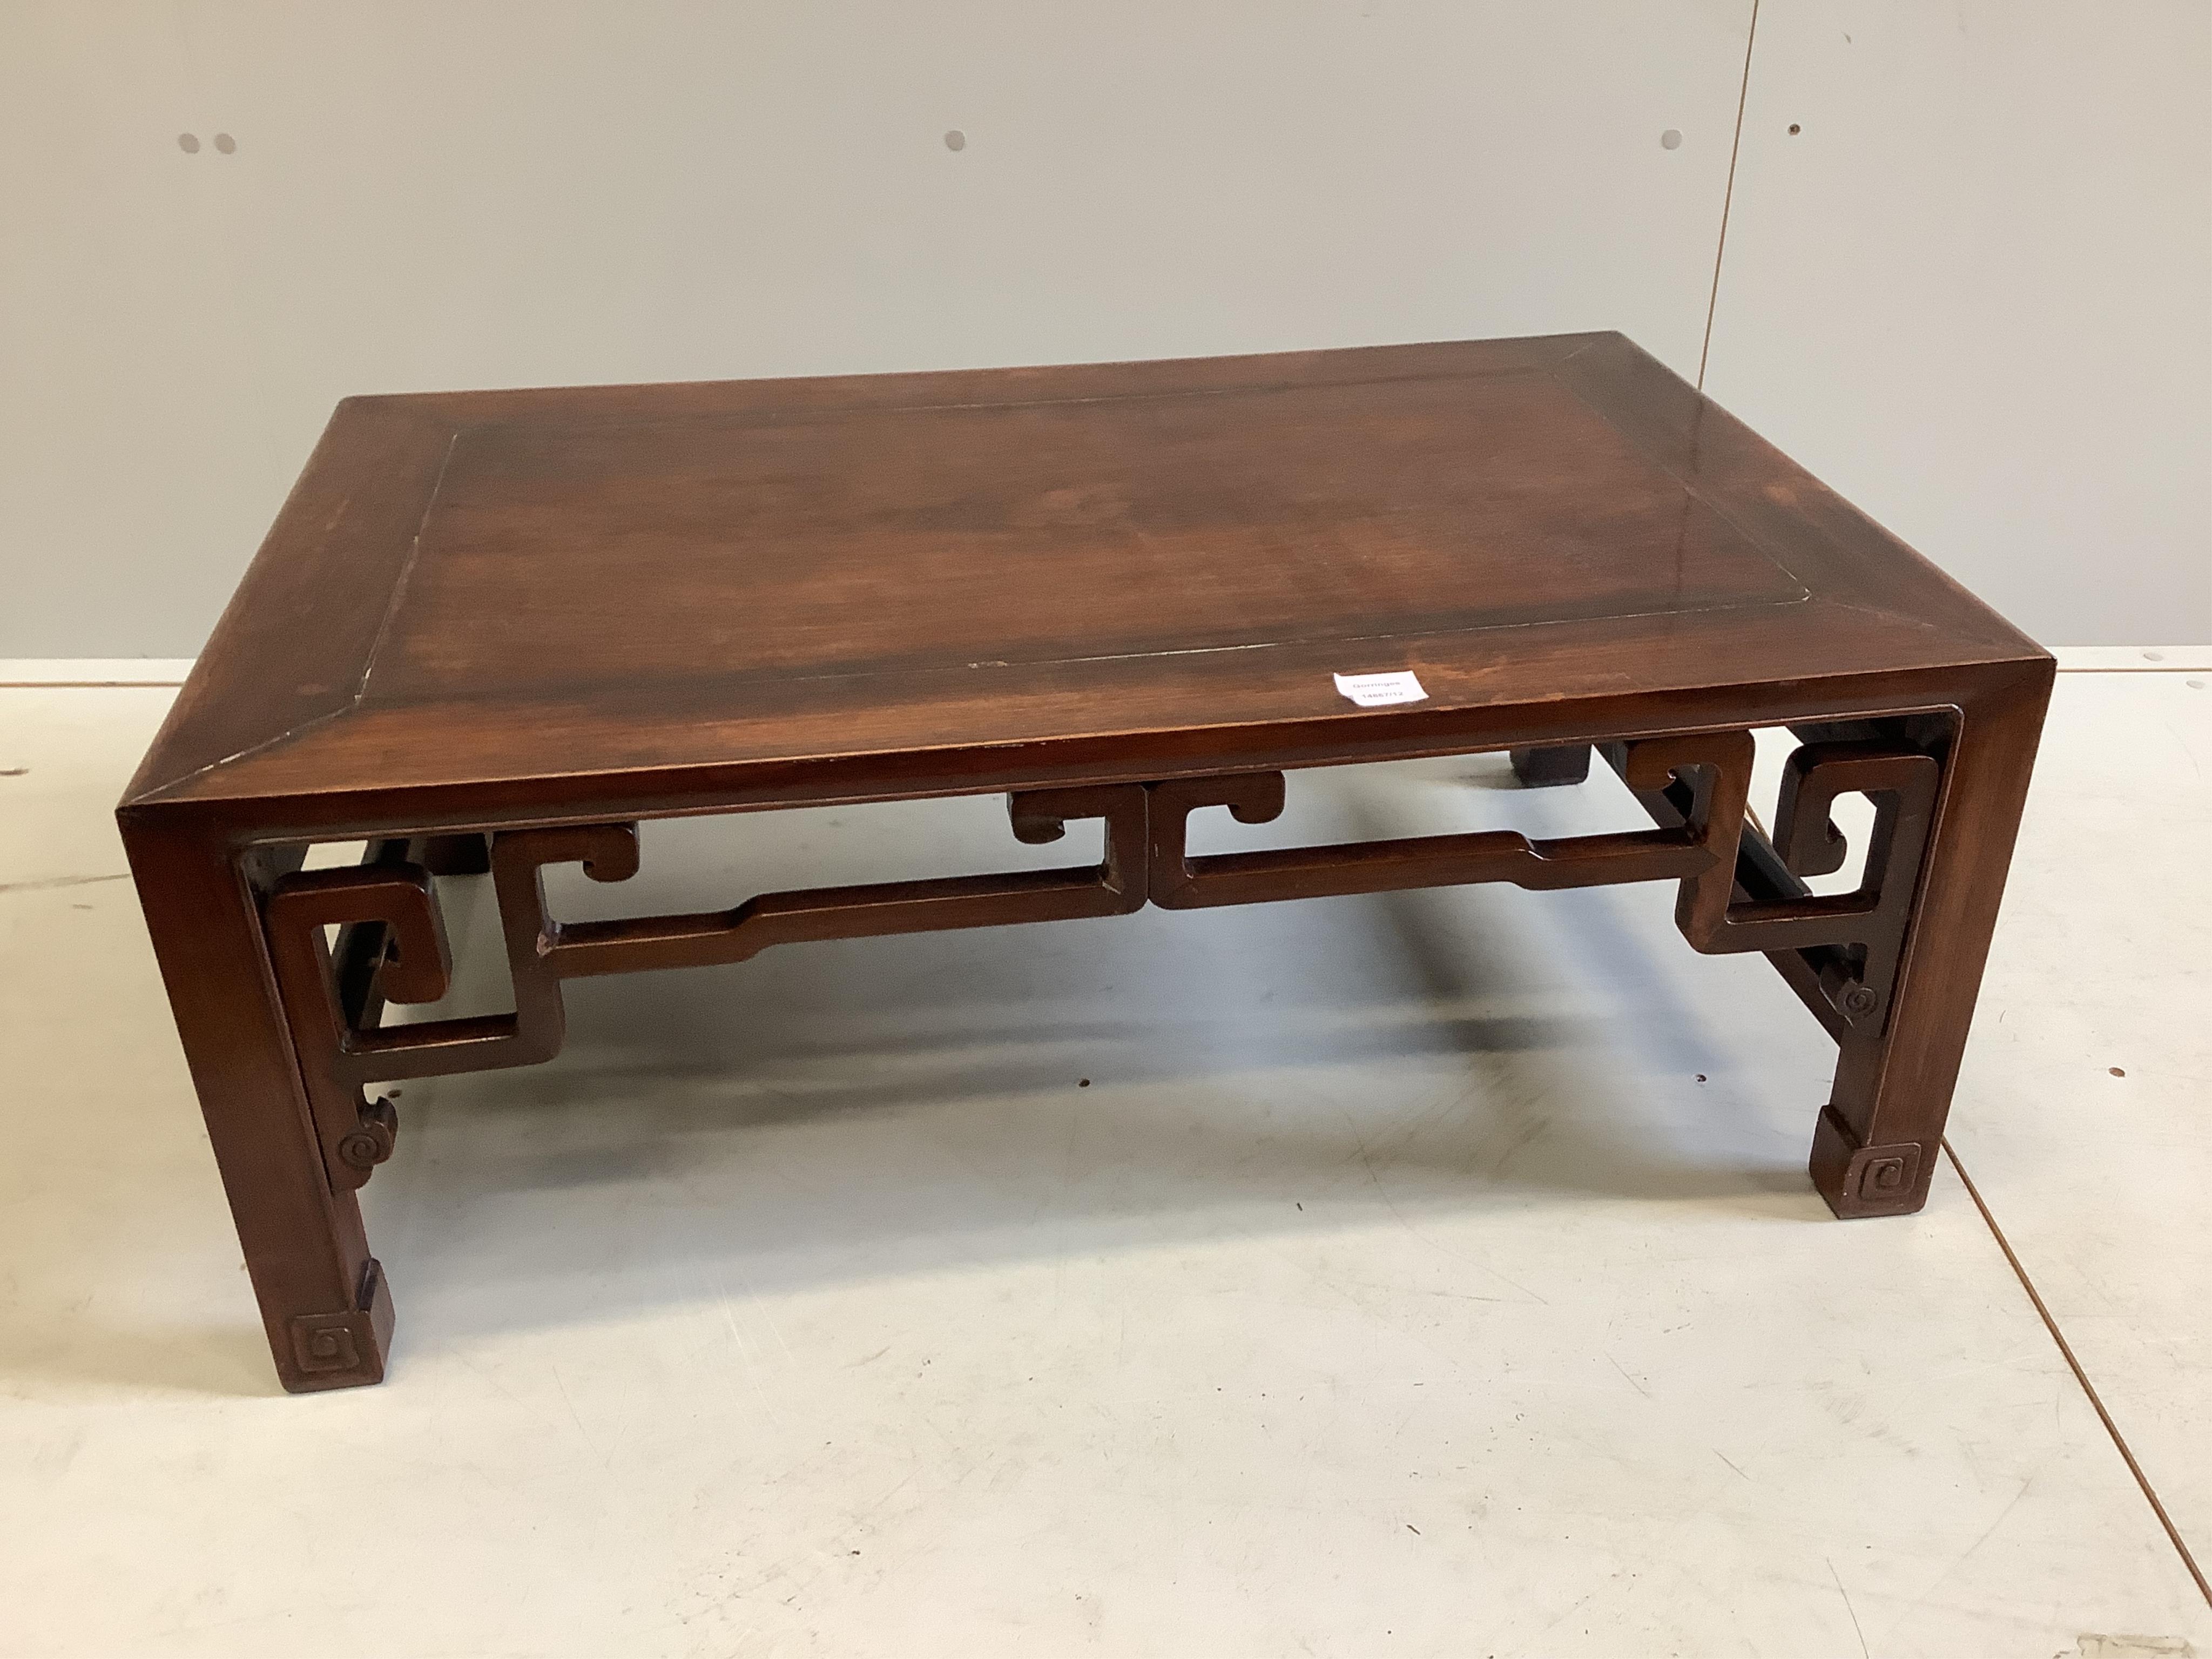 A Chinese rectangular hardwood coffee table, width 91cm, depth 58cm, height 35cm. Condition - fair